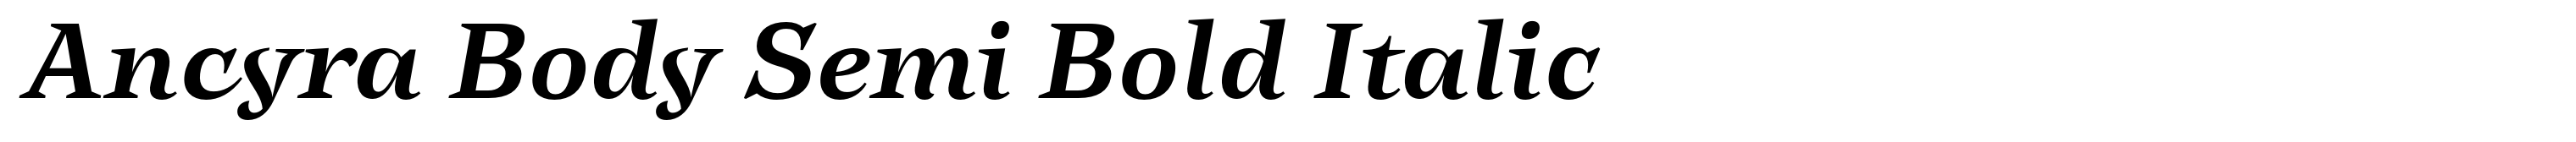 Ancyra Body Semi Bold Italic